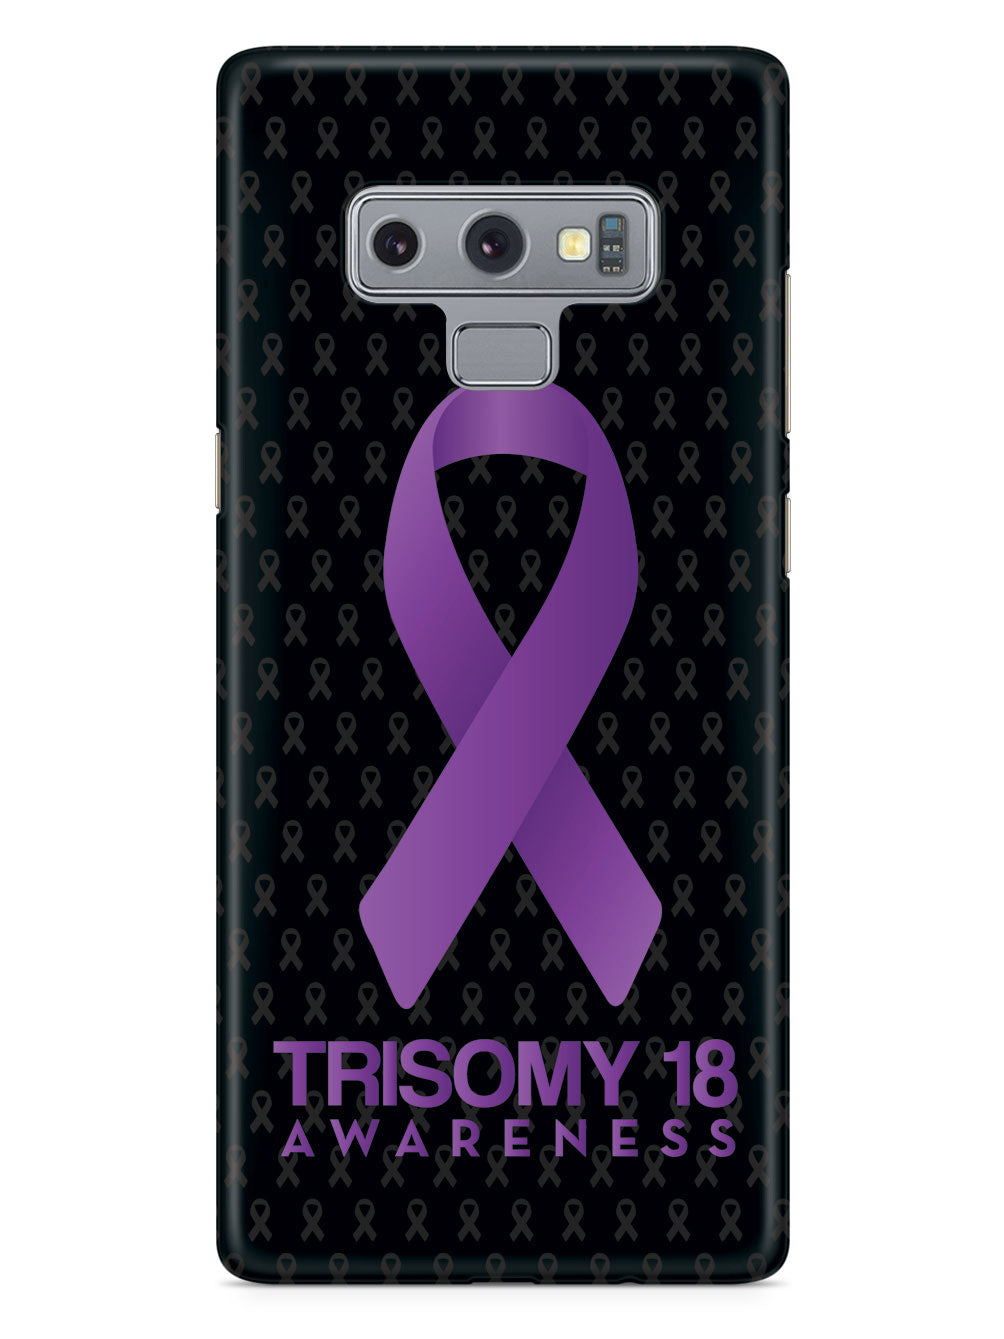 Trisomy 18 - Awareness Ribbon - Black Case